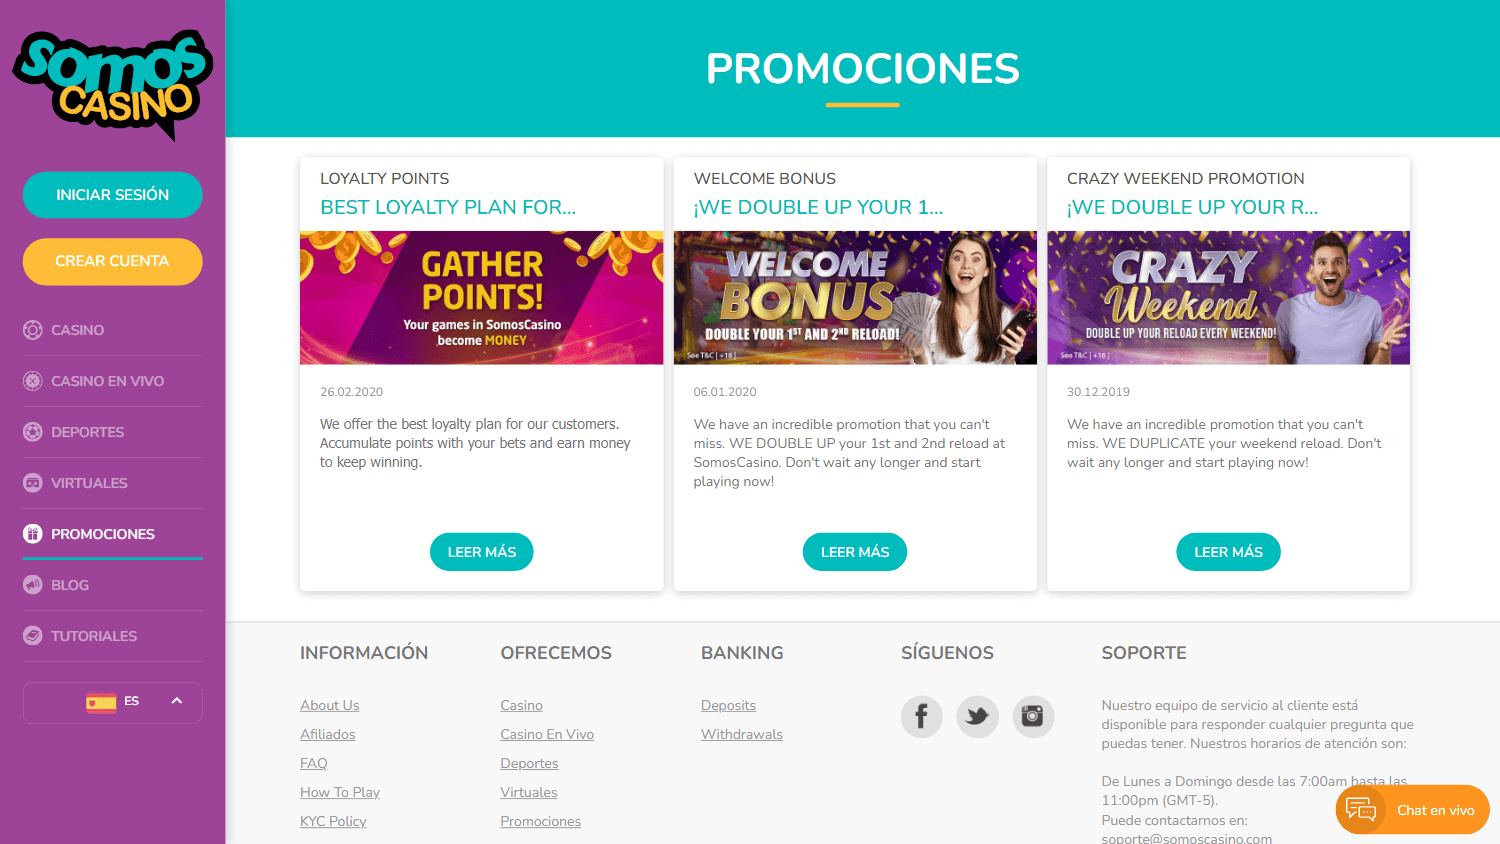 somos_casino_promotions_desktop